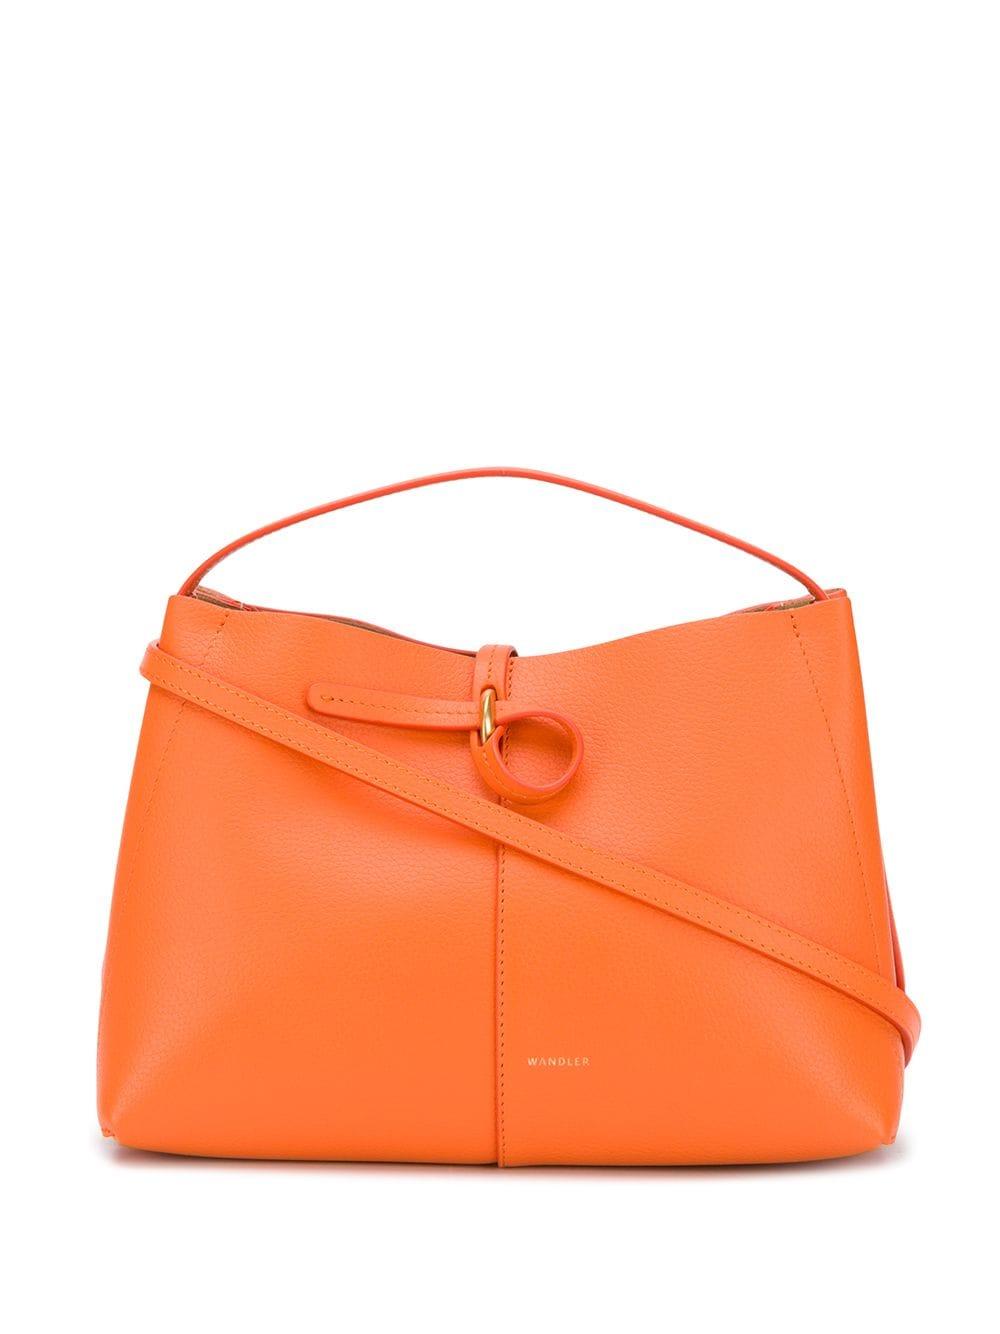 Wandler Leather Ava Mini Tote Bag in Orange | Lyst